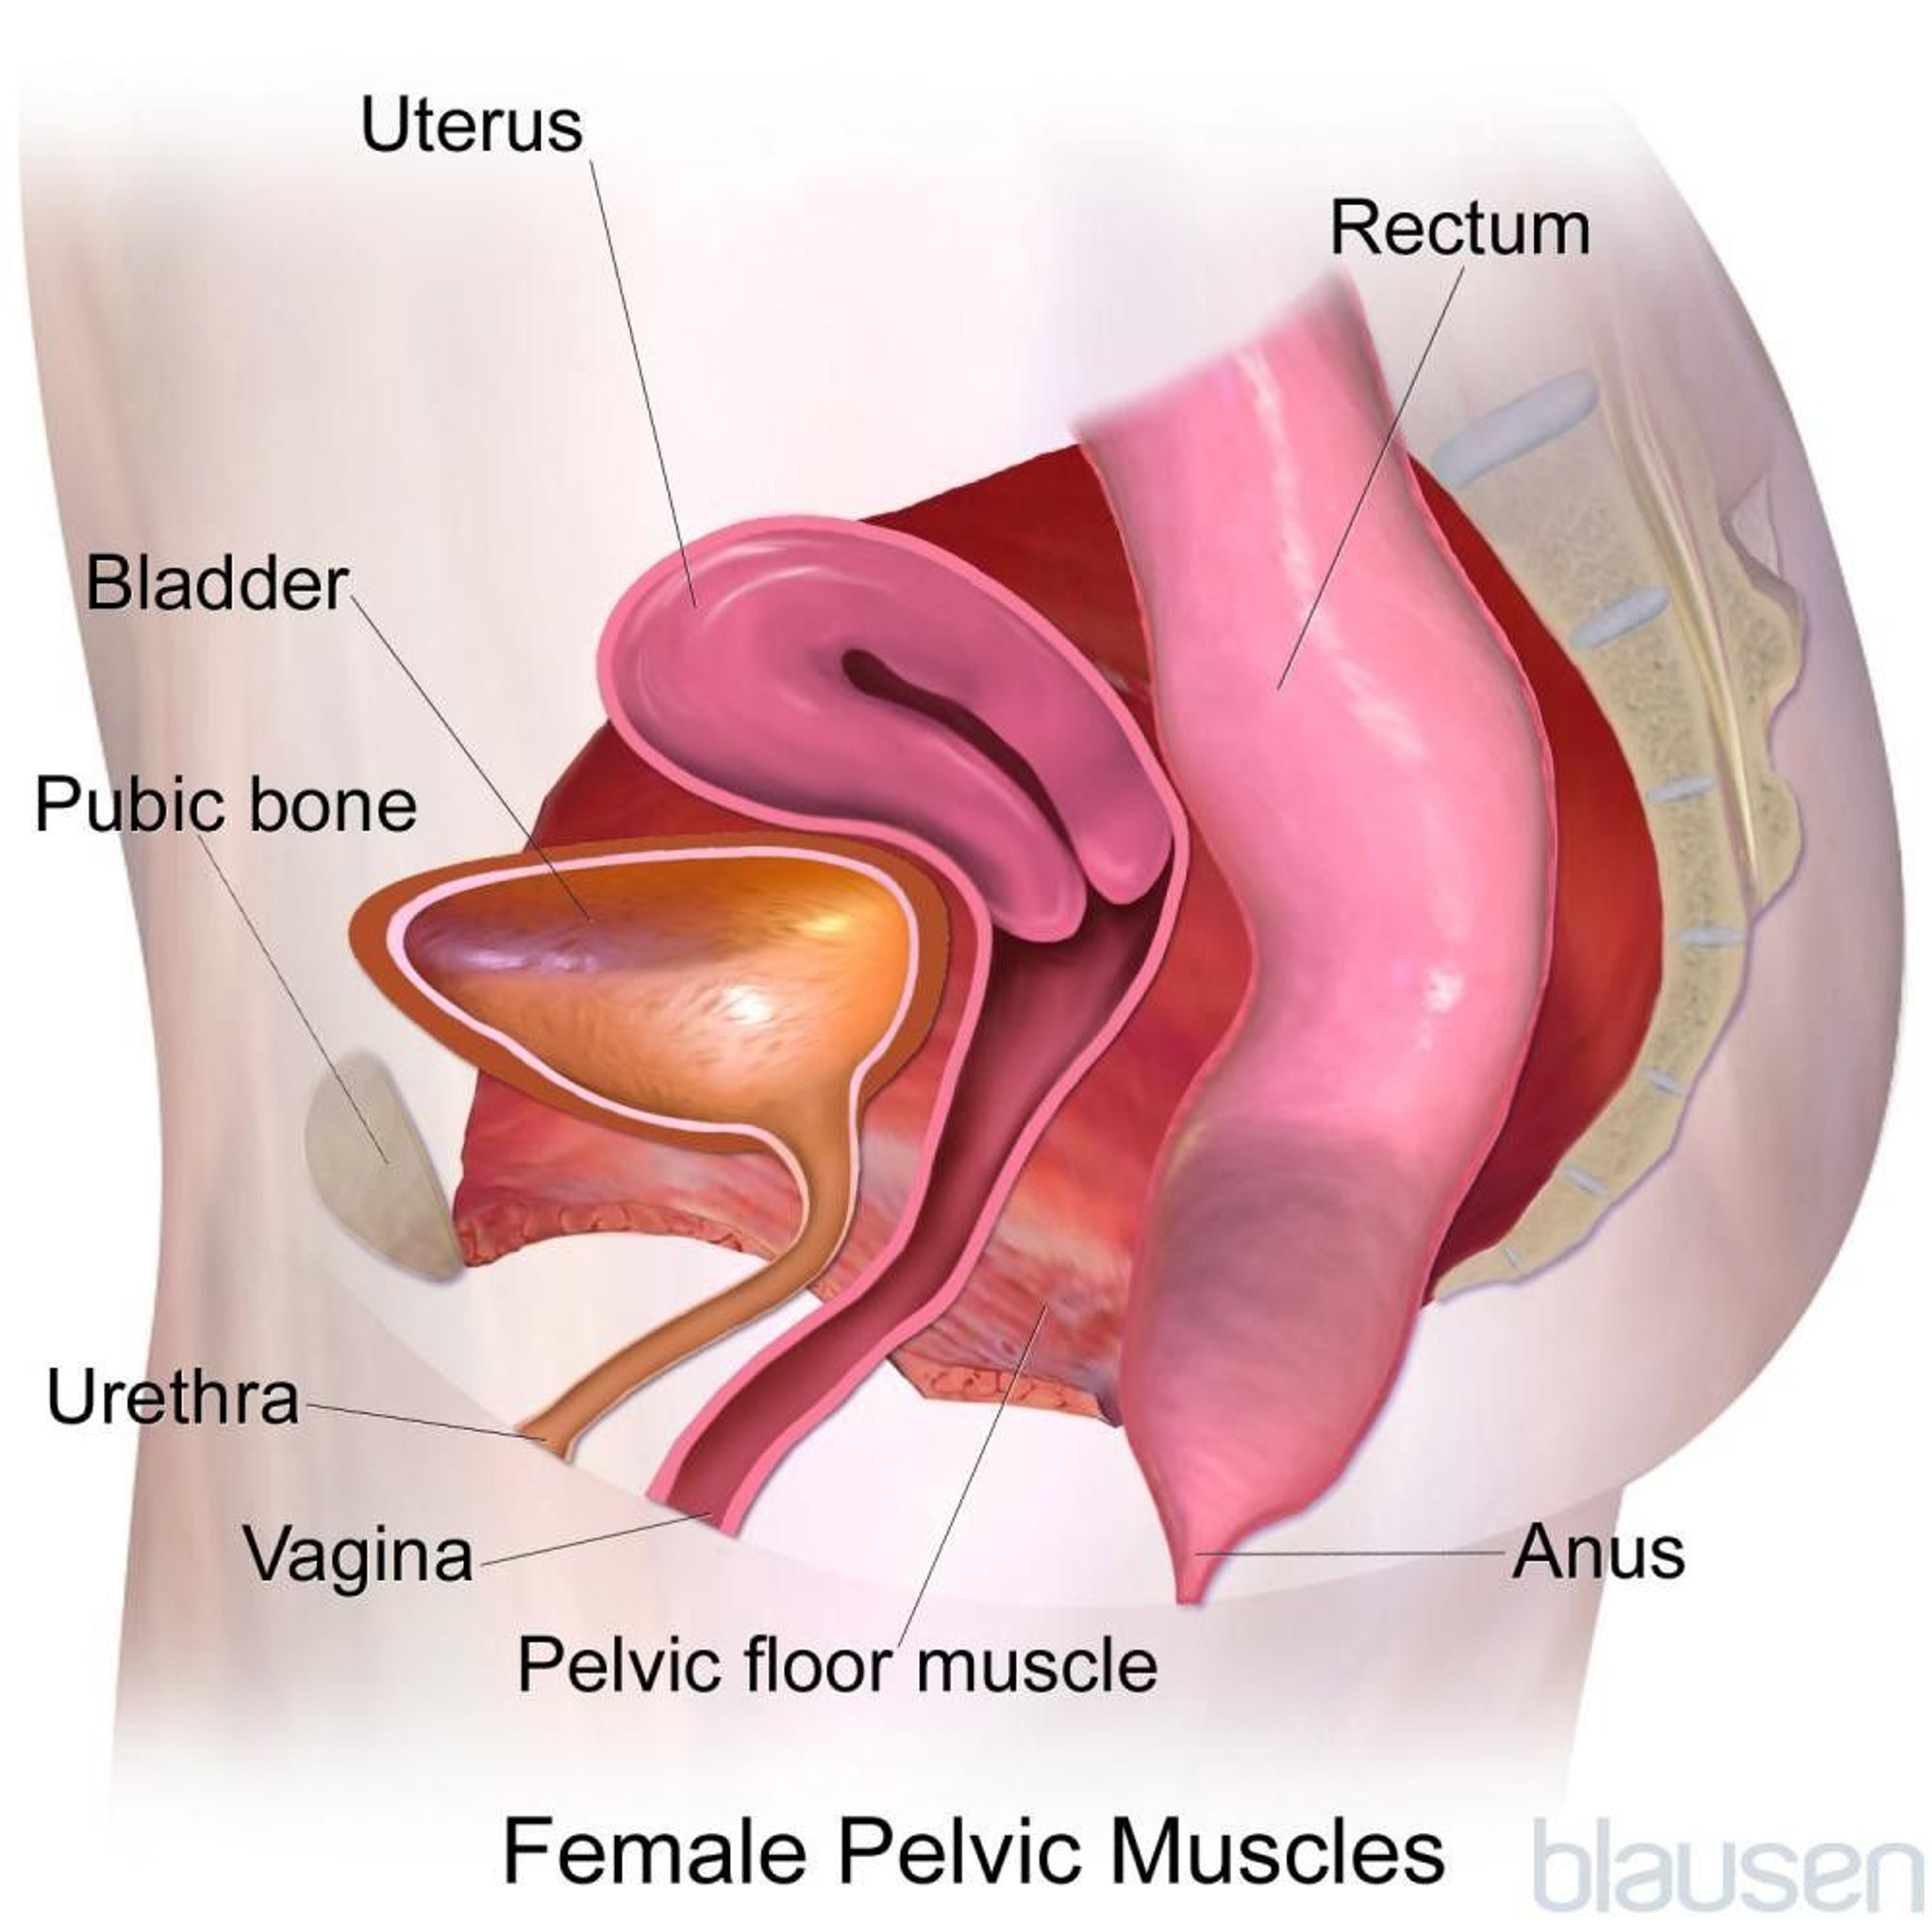 Urethra in the Female